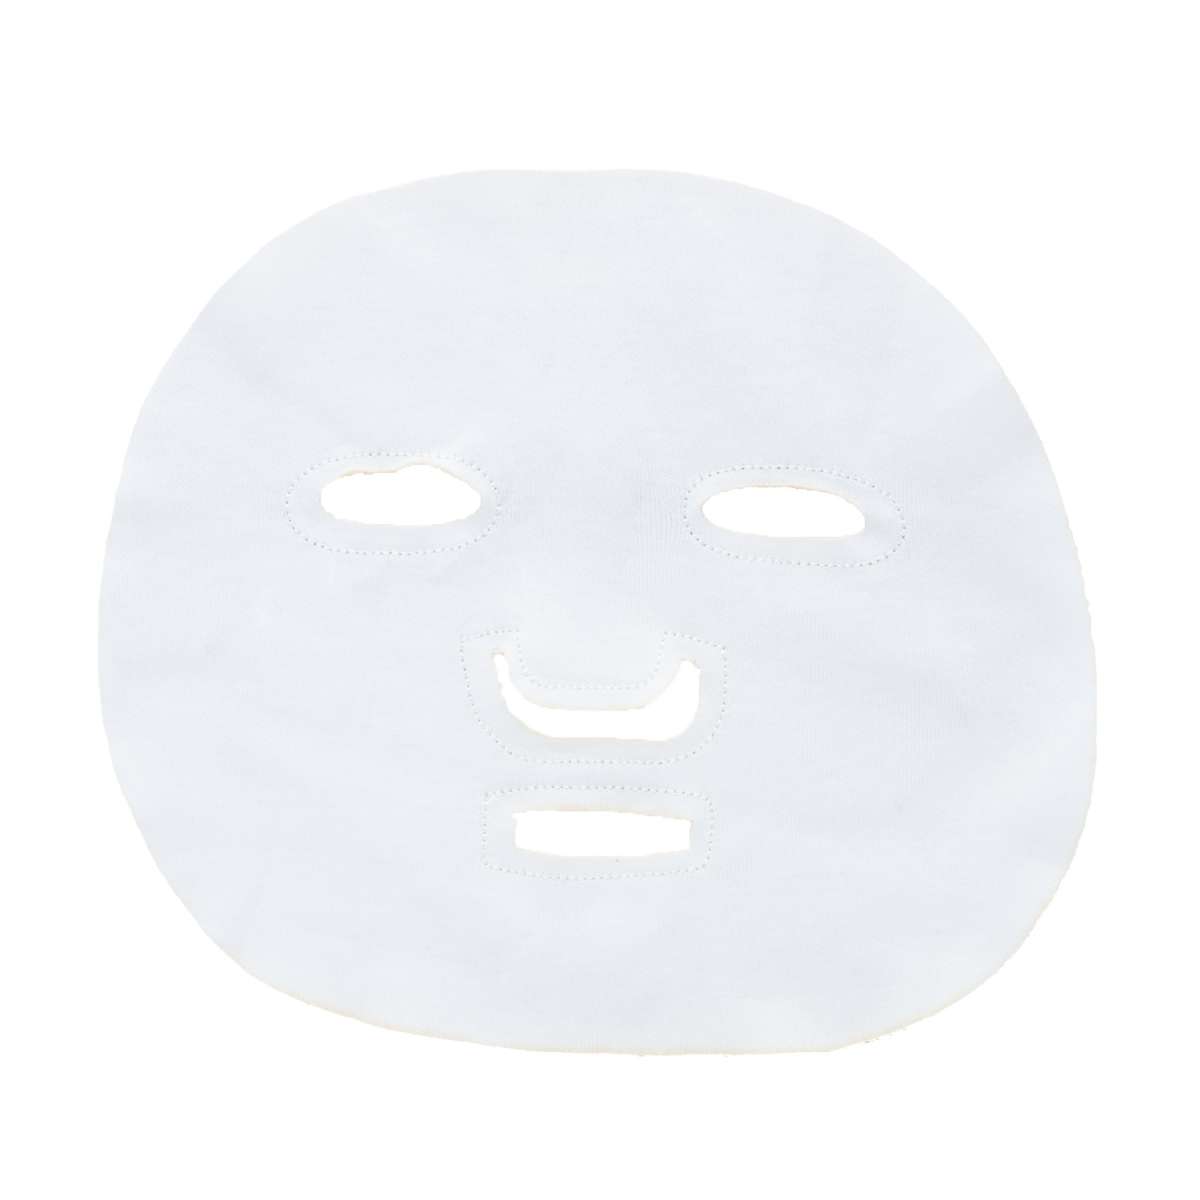 FAIR SQUARED  - cotton face-mask